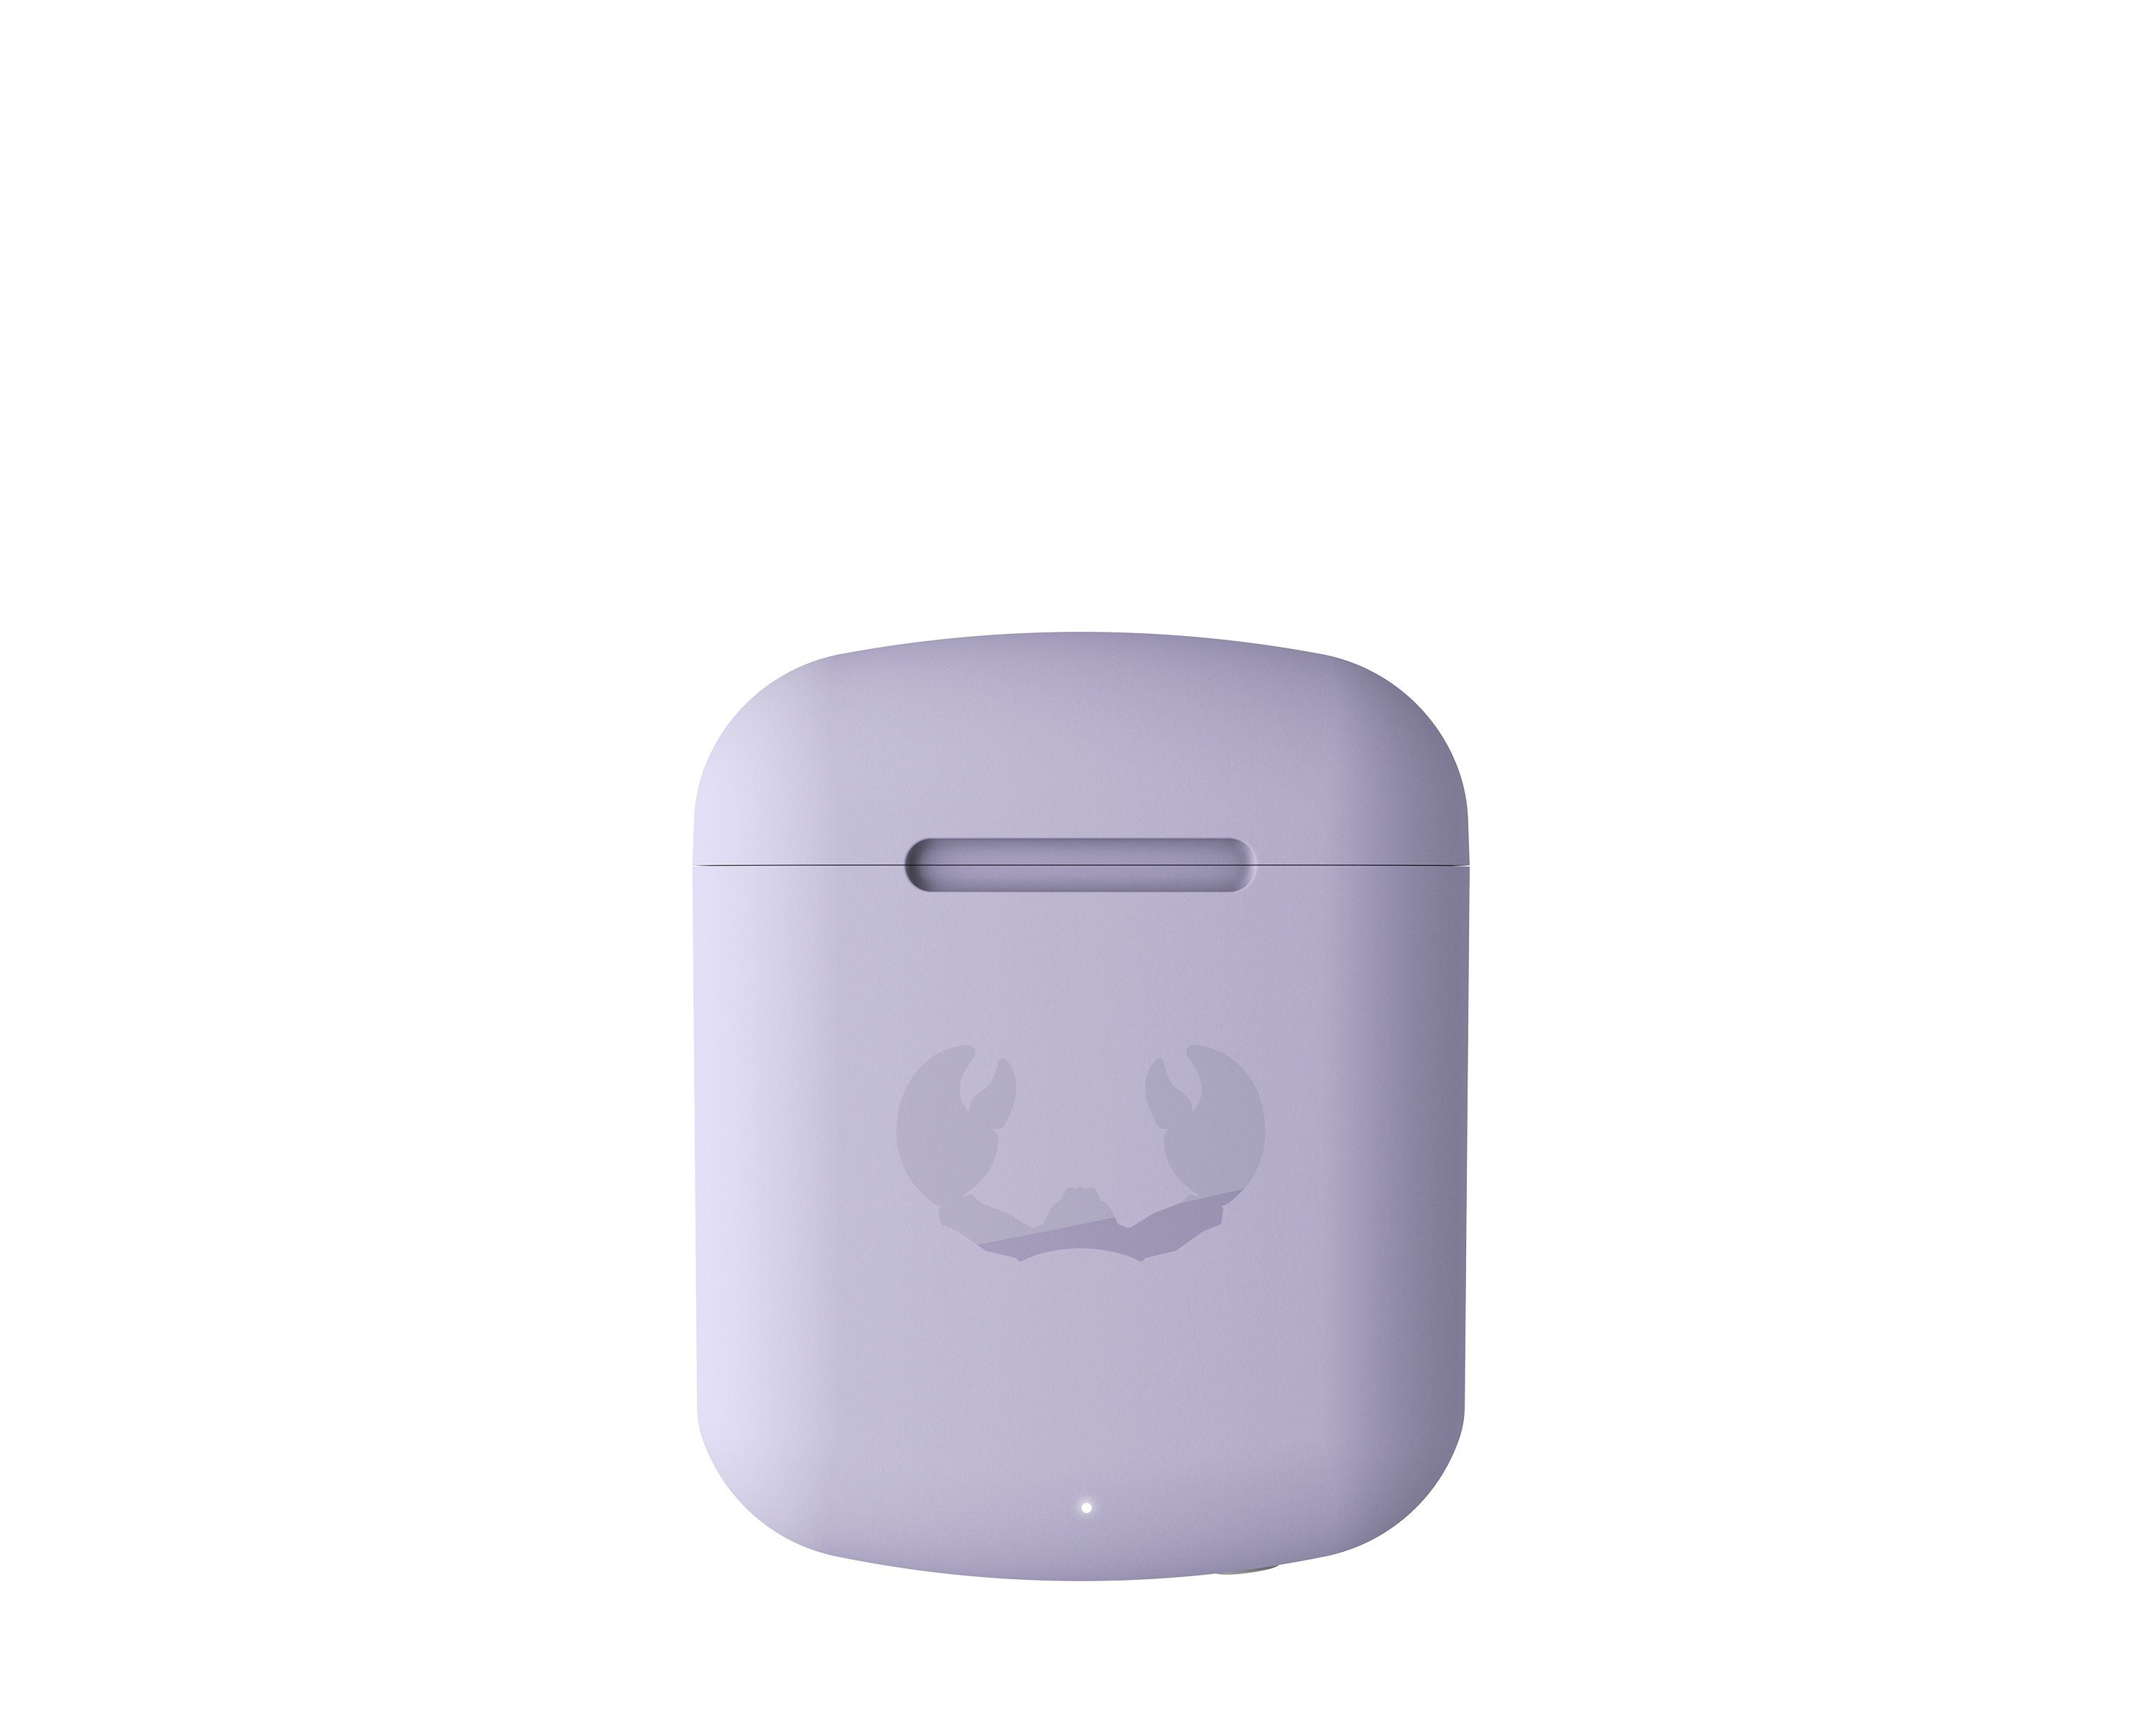 Auto-Kopplung) (Dual-Master-Funktion, Twins Fresh´n Dreamy Lilac Core Touch-Control-Steuerung, Rebel Kopfhörer